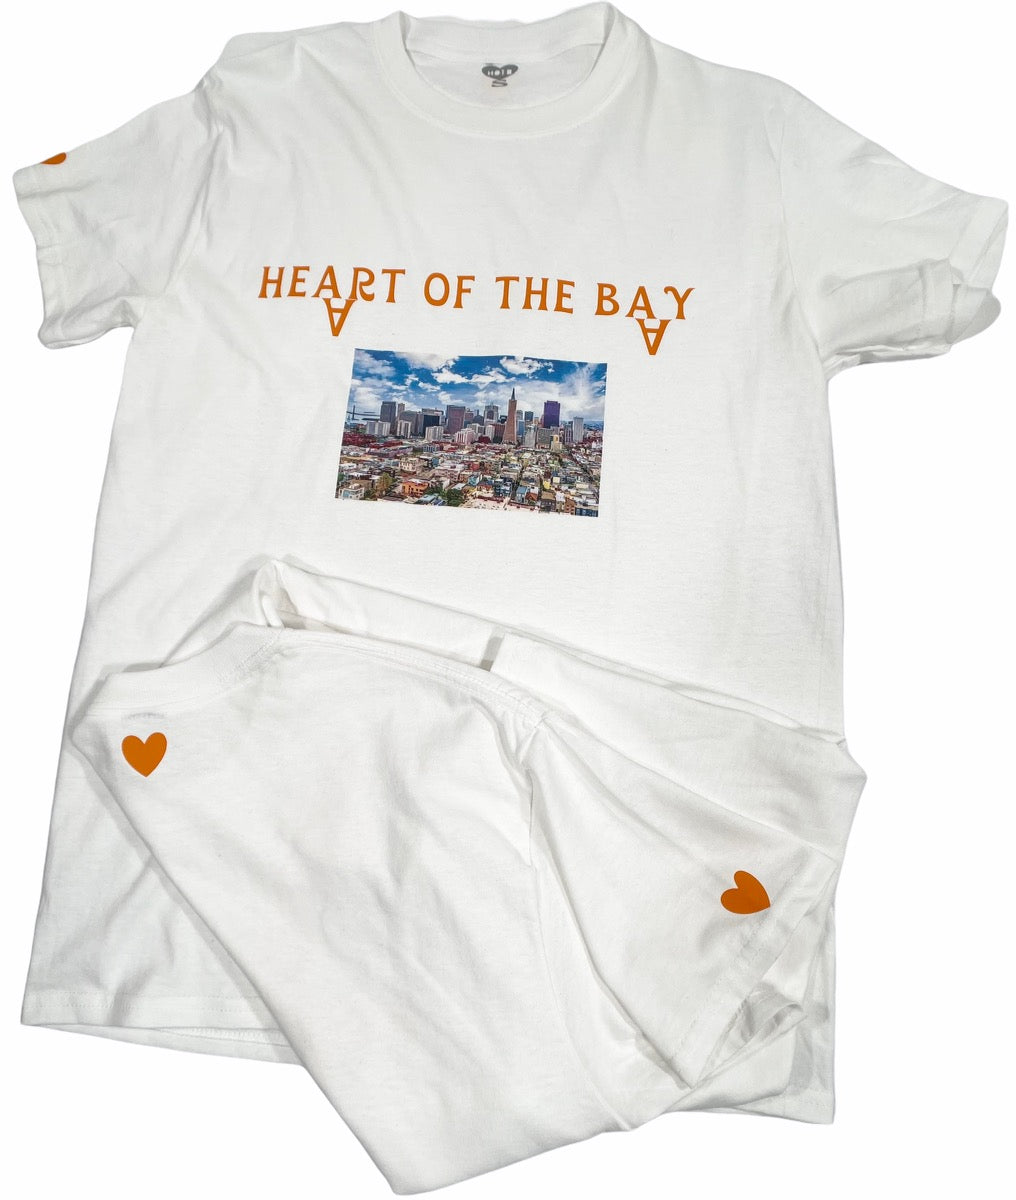 City Life 'Heart of the Bay' Tee- Short- White/Orange